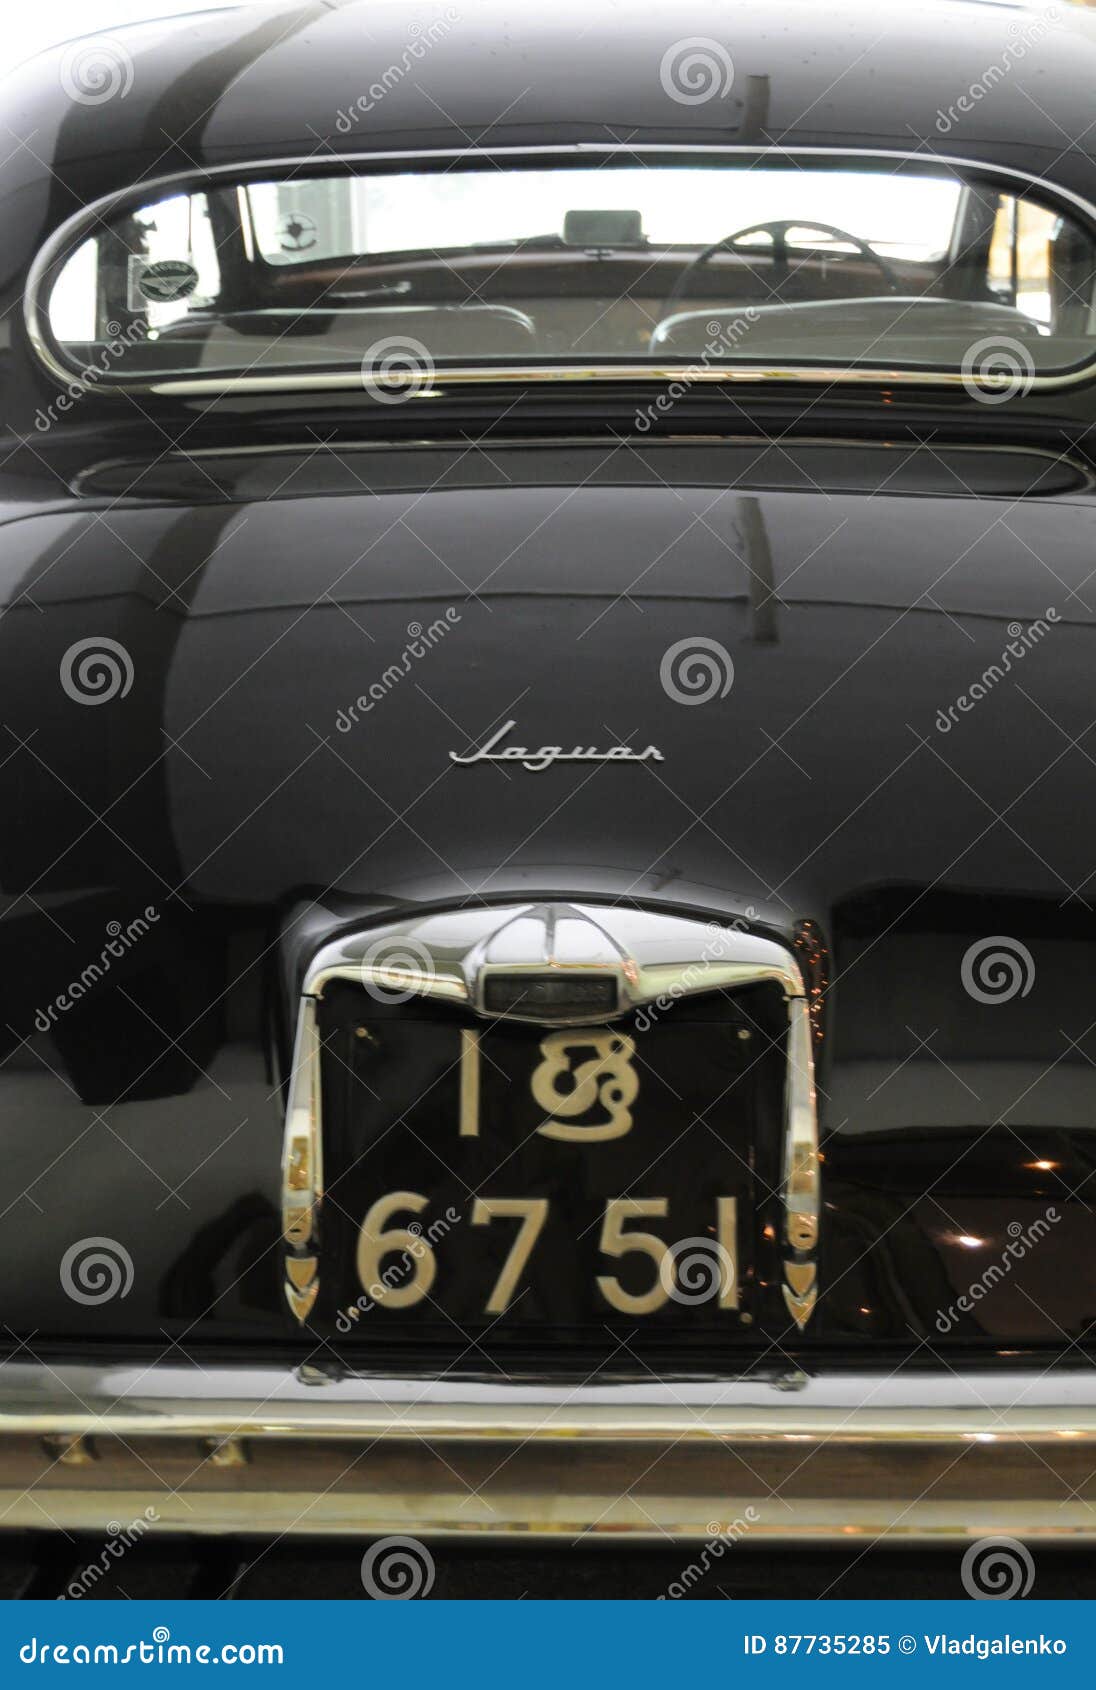 26+ Old jaguar cars for sale in sri lanka information